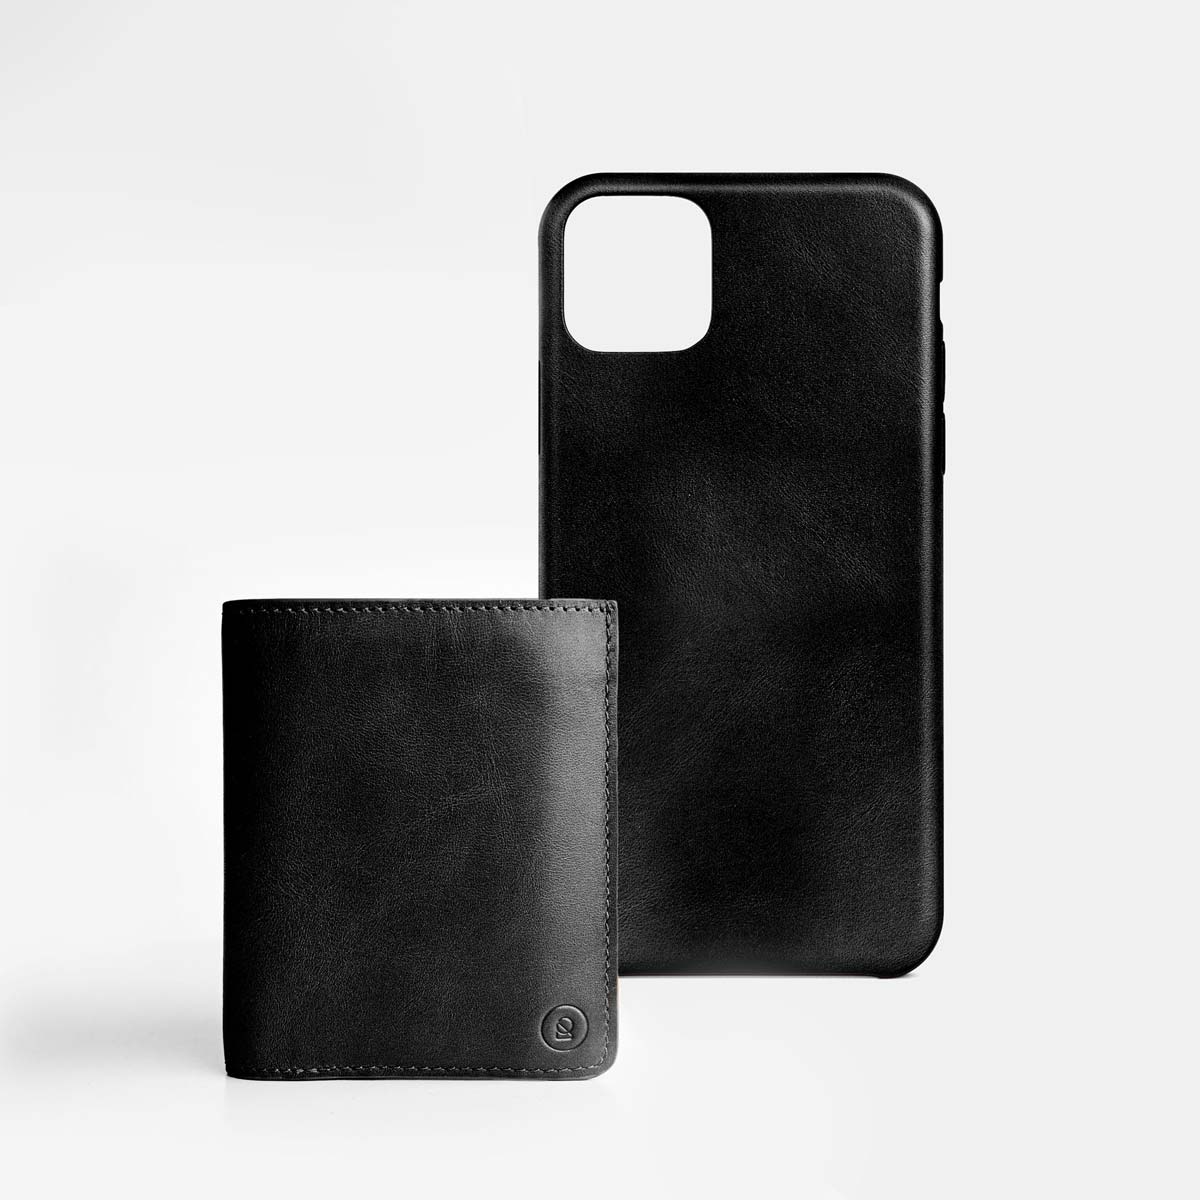 Leather iPhone X/Xs Shell Case - Black - RYAN London